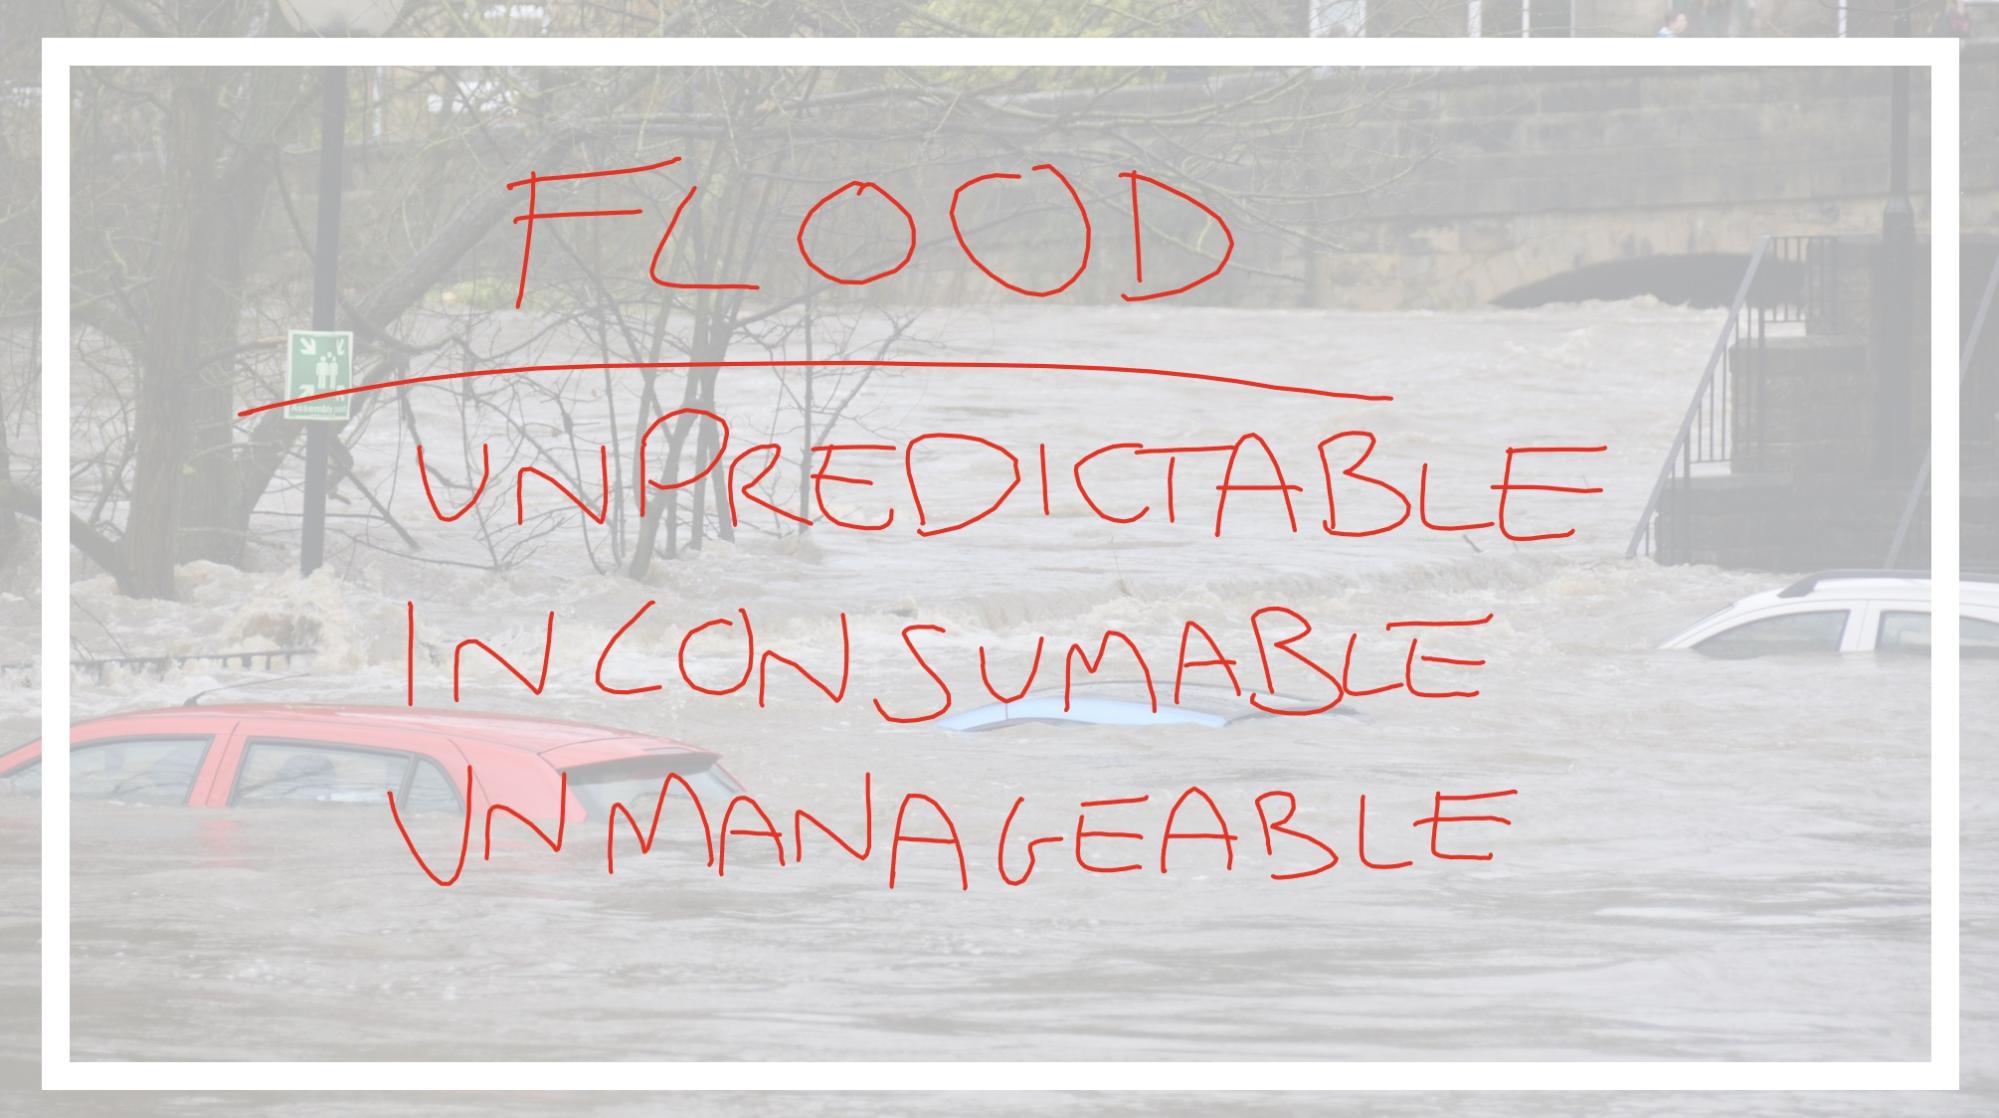 Flood - unpredictable, inconsumable, unmanageable